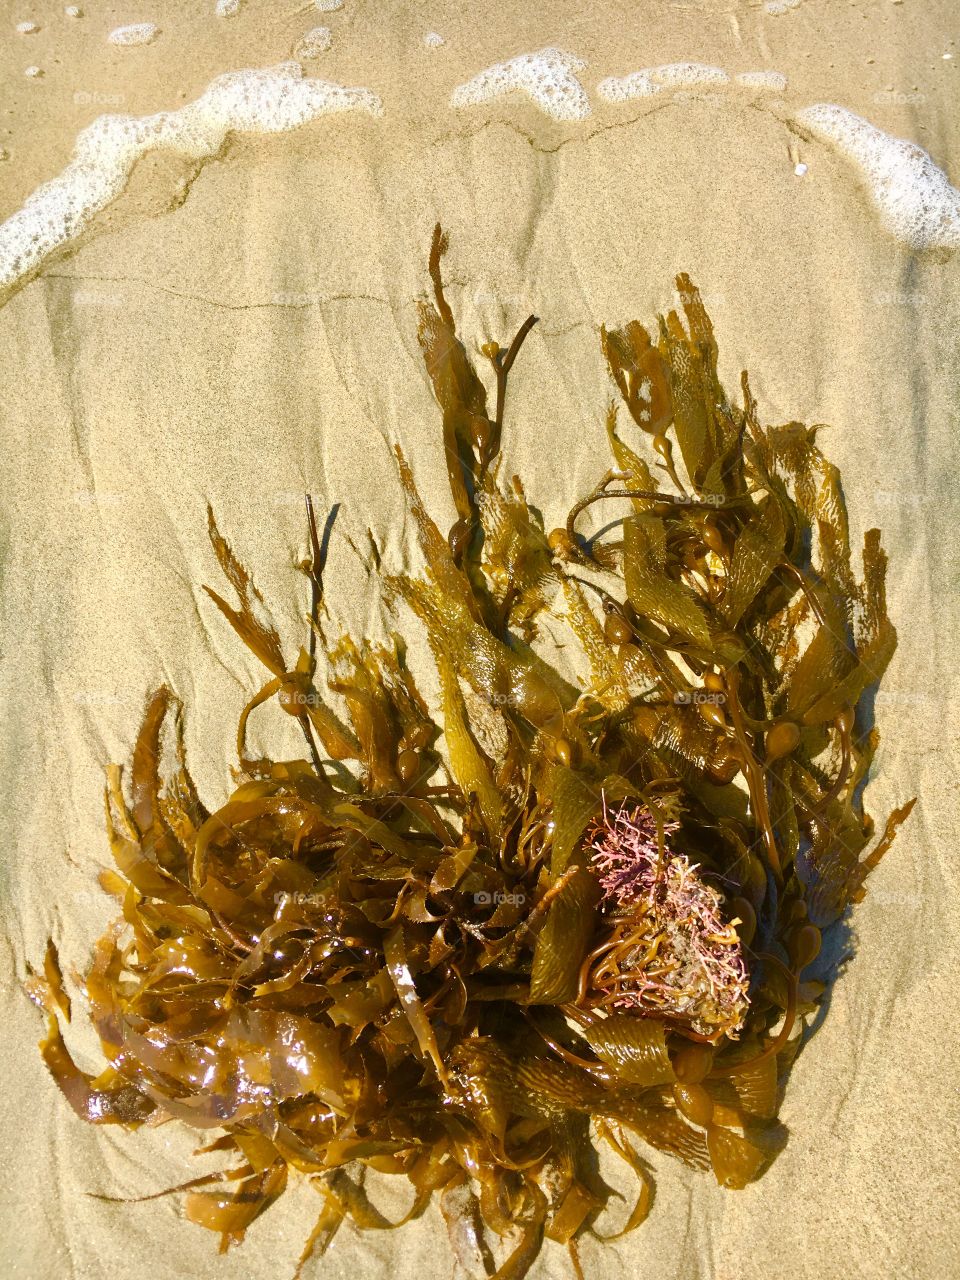 🌴Huntington Beach, CA Kelp that has washed ashore from the ocean floor. 